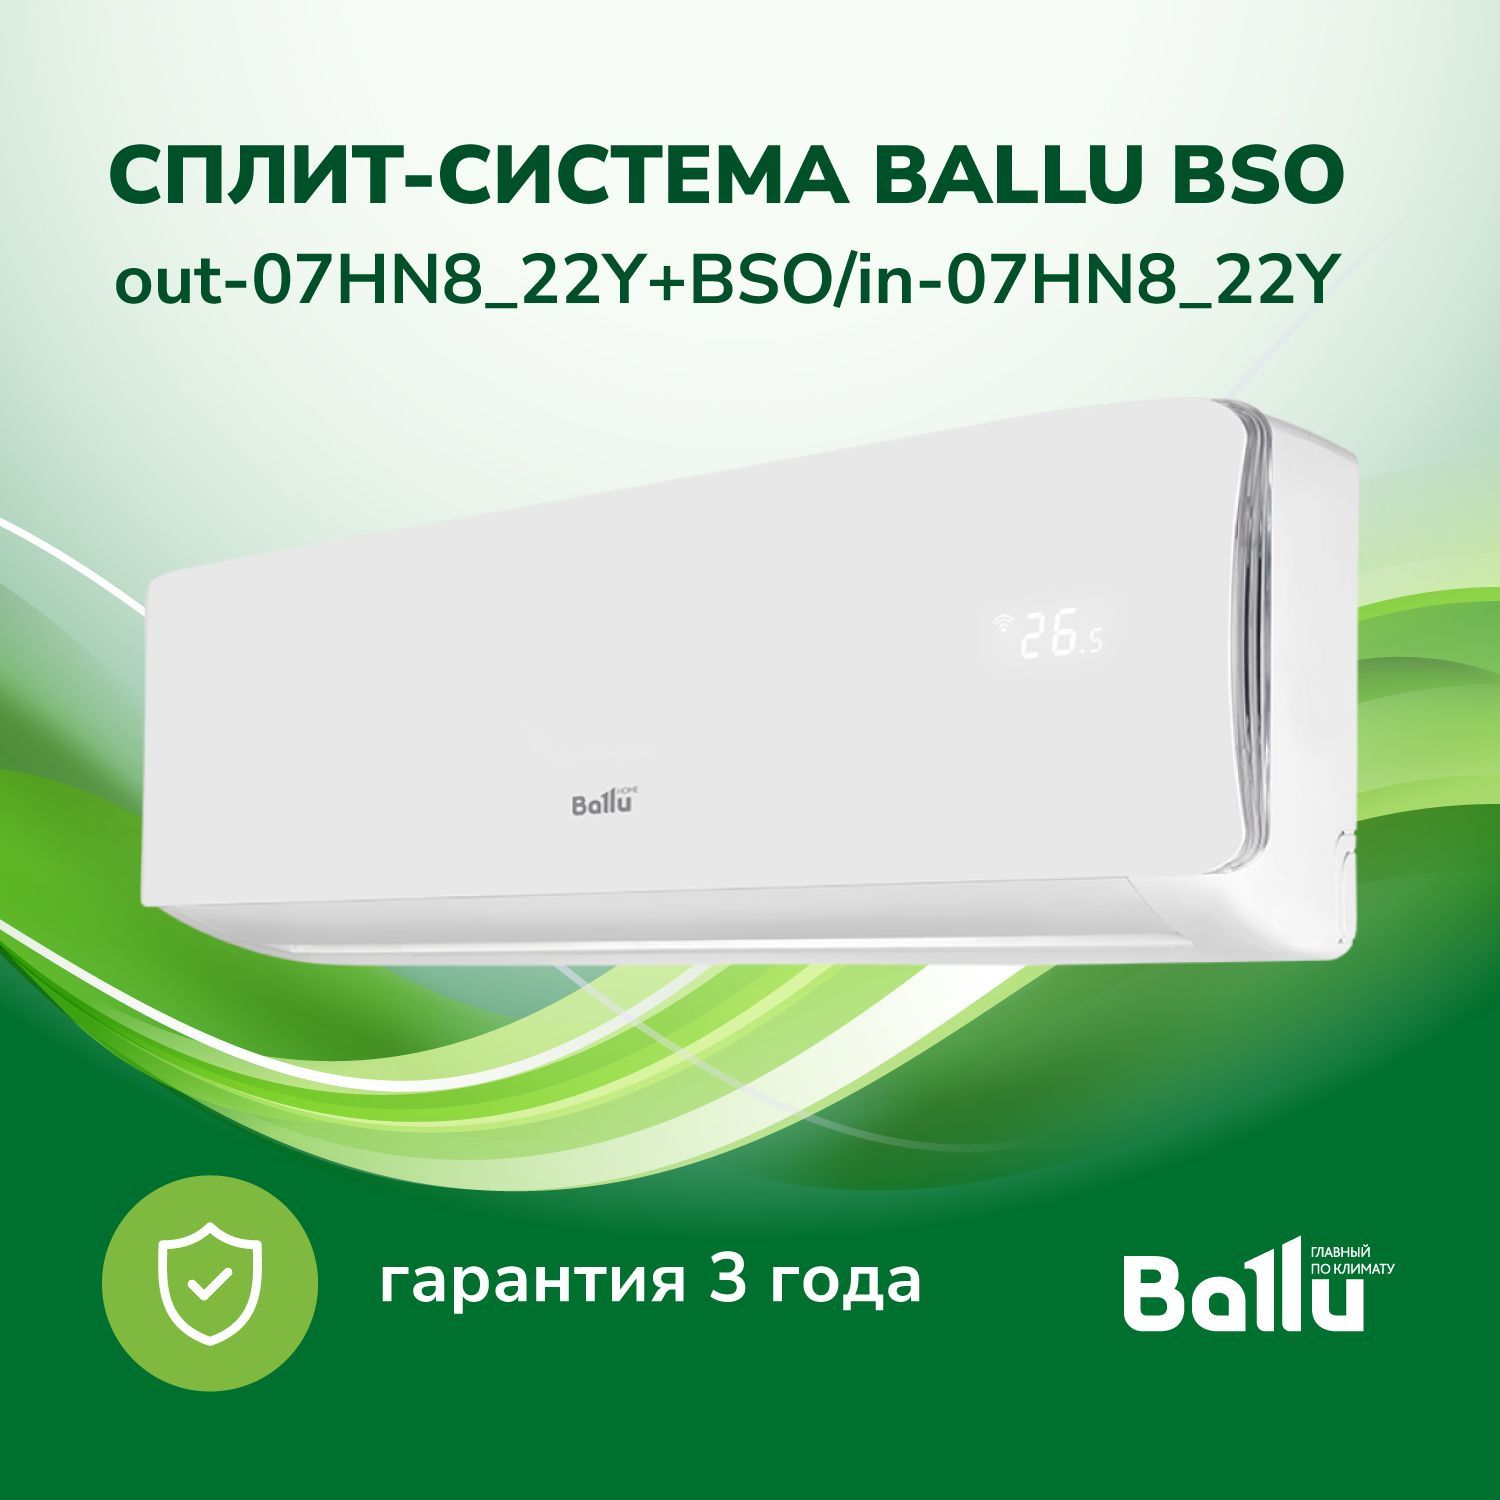 Сплит-система Ballu BSO-07hn8_22y. Сплит-система Ballu BSO-12hn8_22y, белый. Сплит-система Ballu Olympio Edge BSO-09hn8_22y. Сплит система Ballu BSO/in-07hn (21кв.).